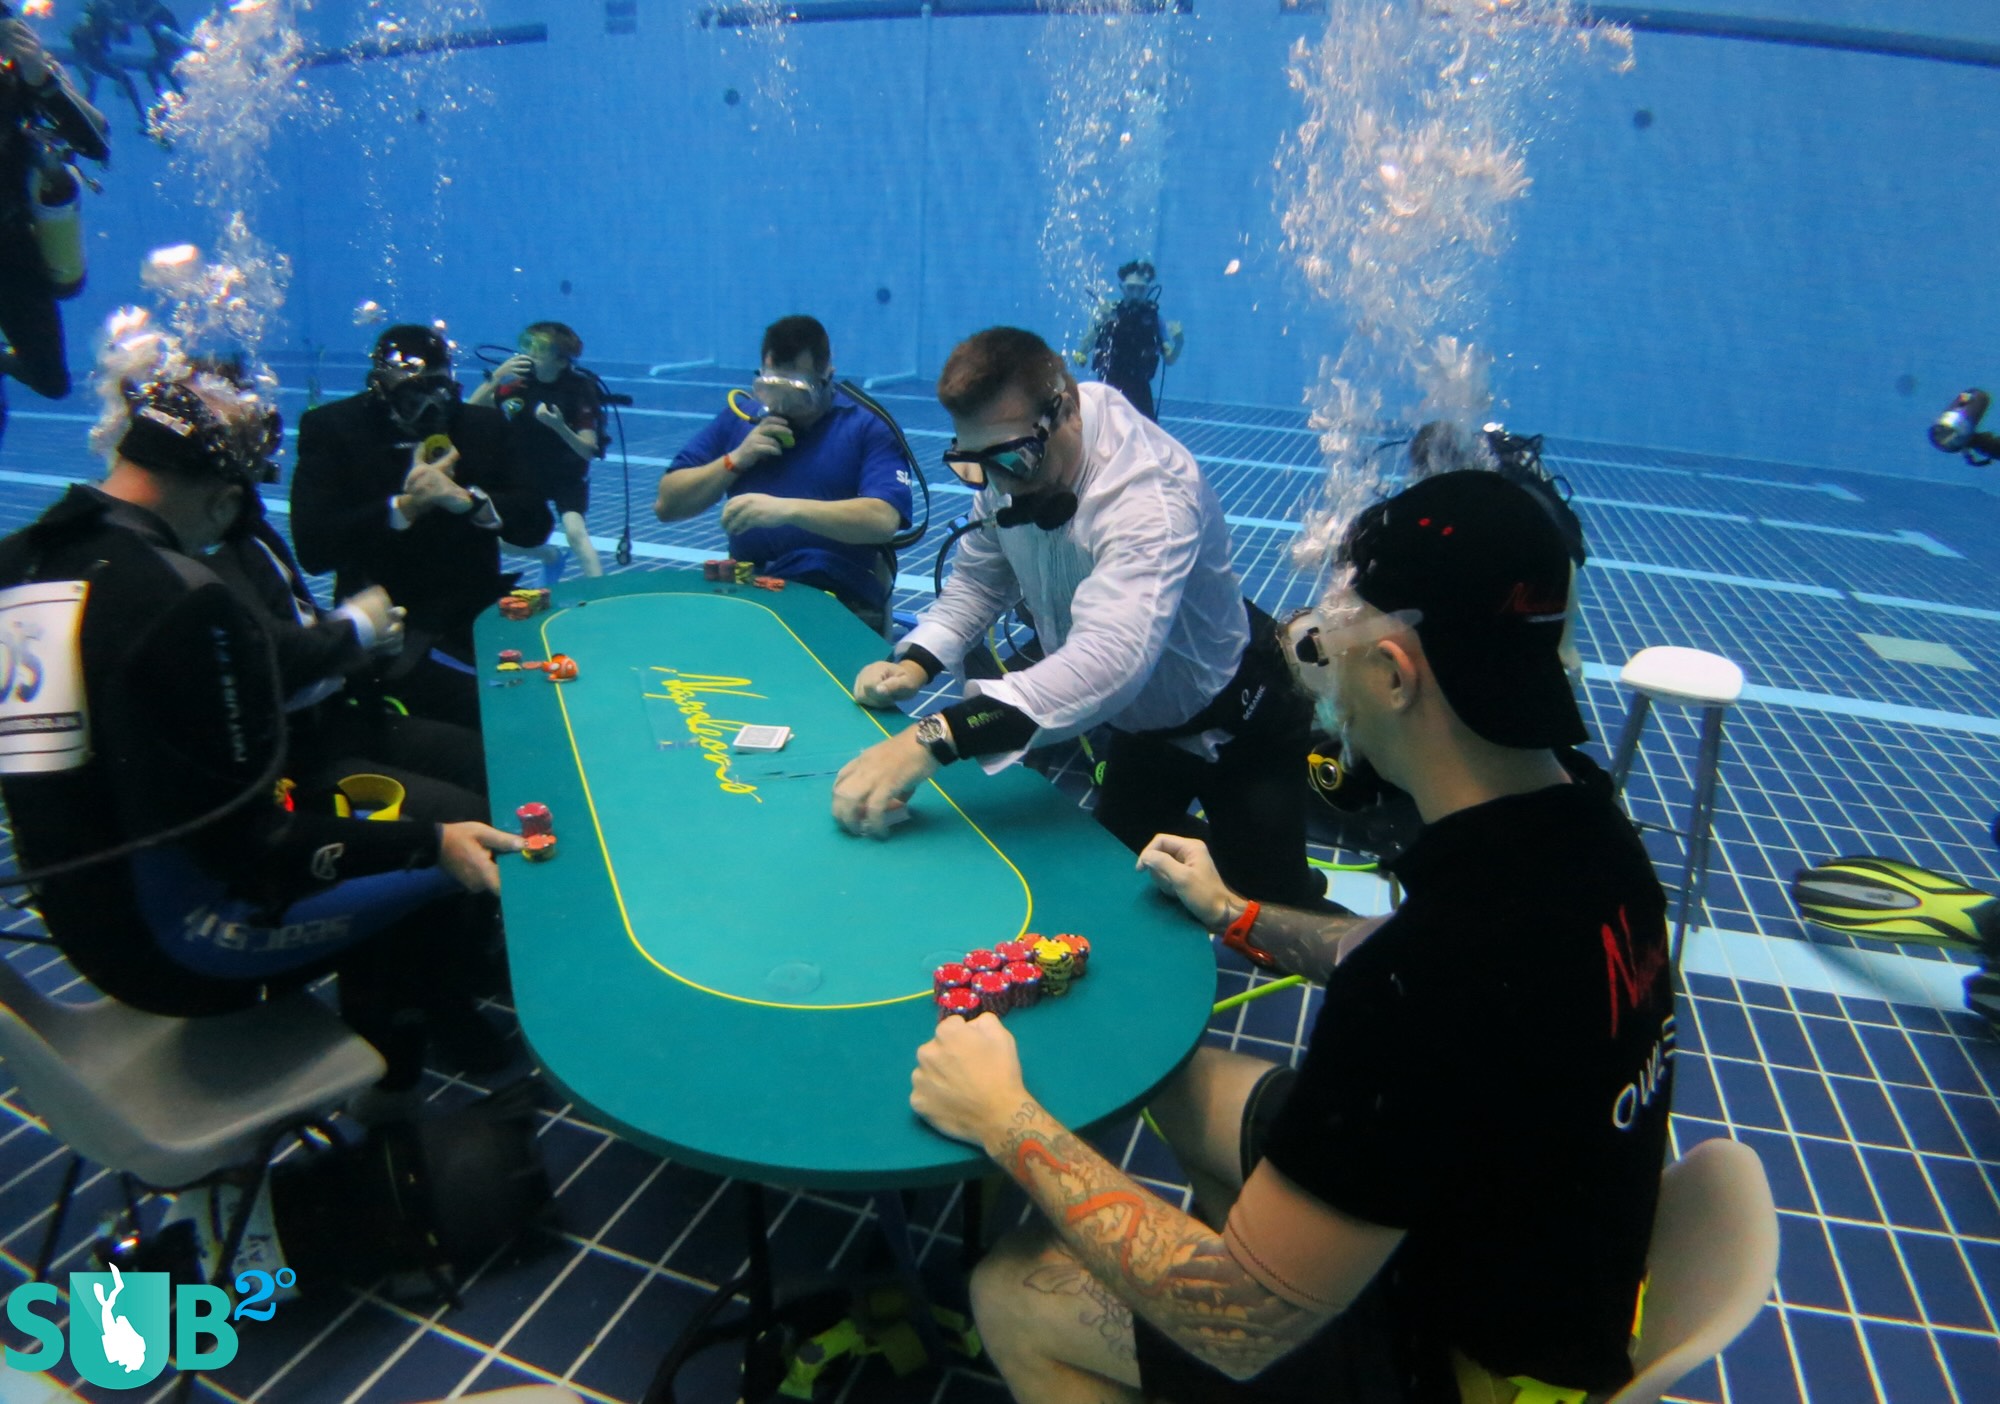 Play poker underwater.